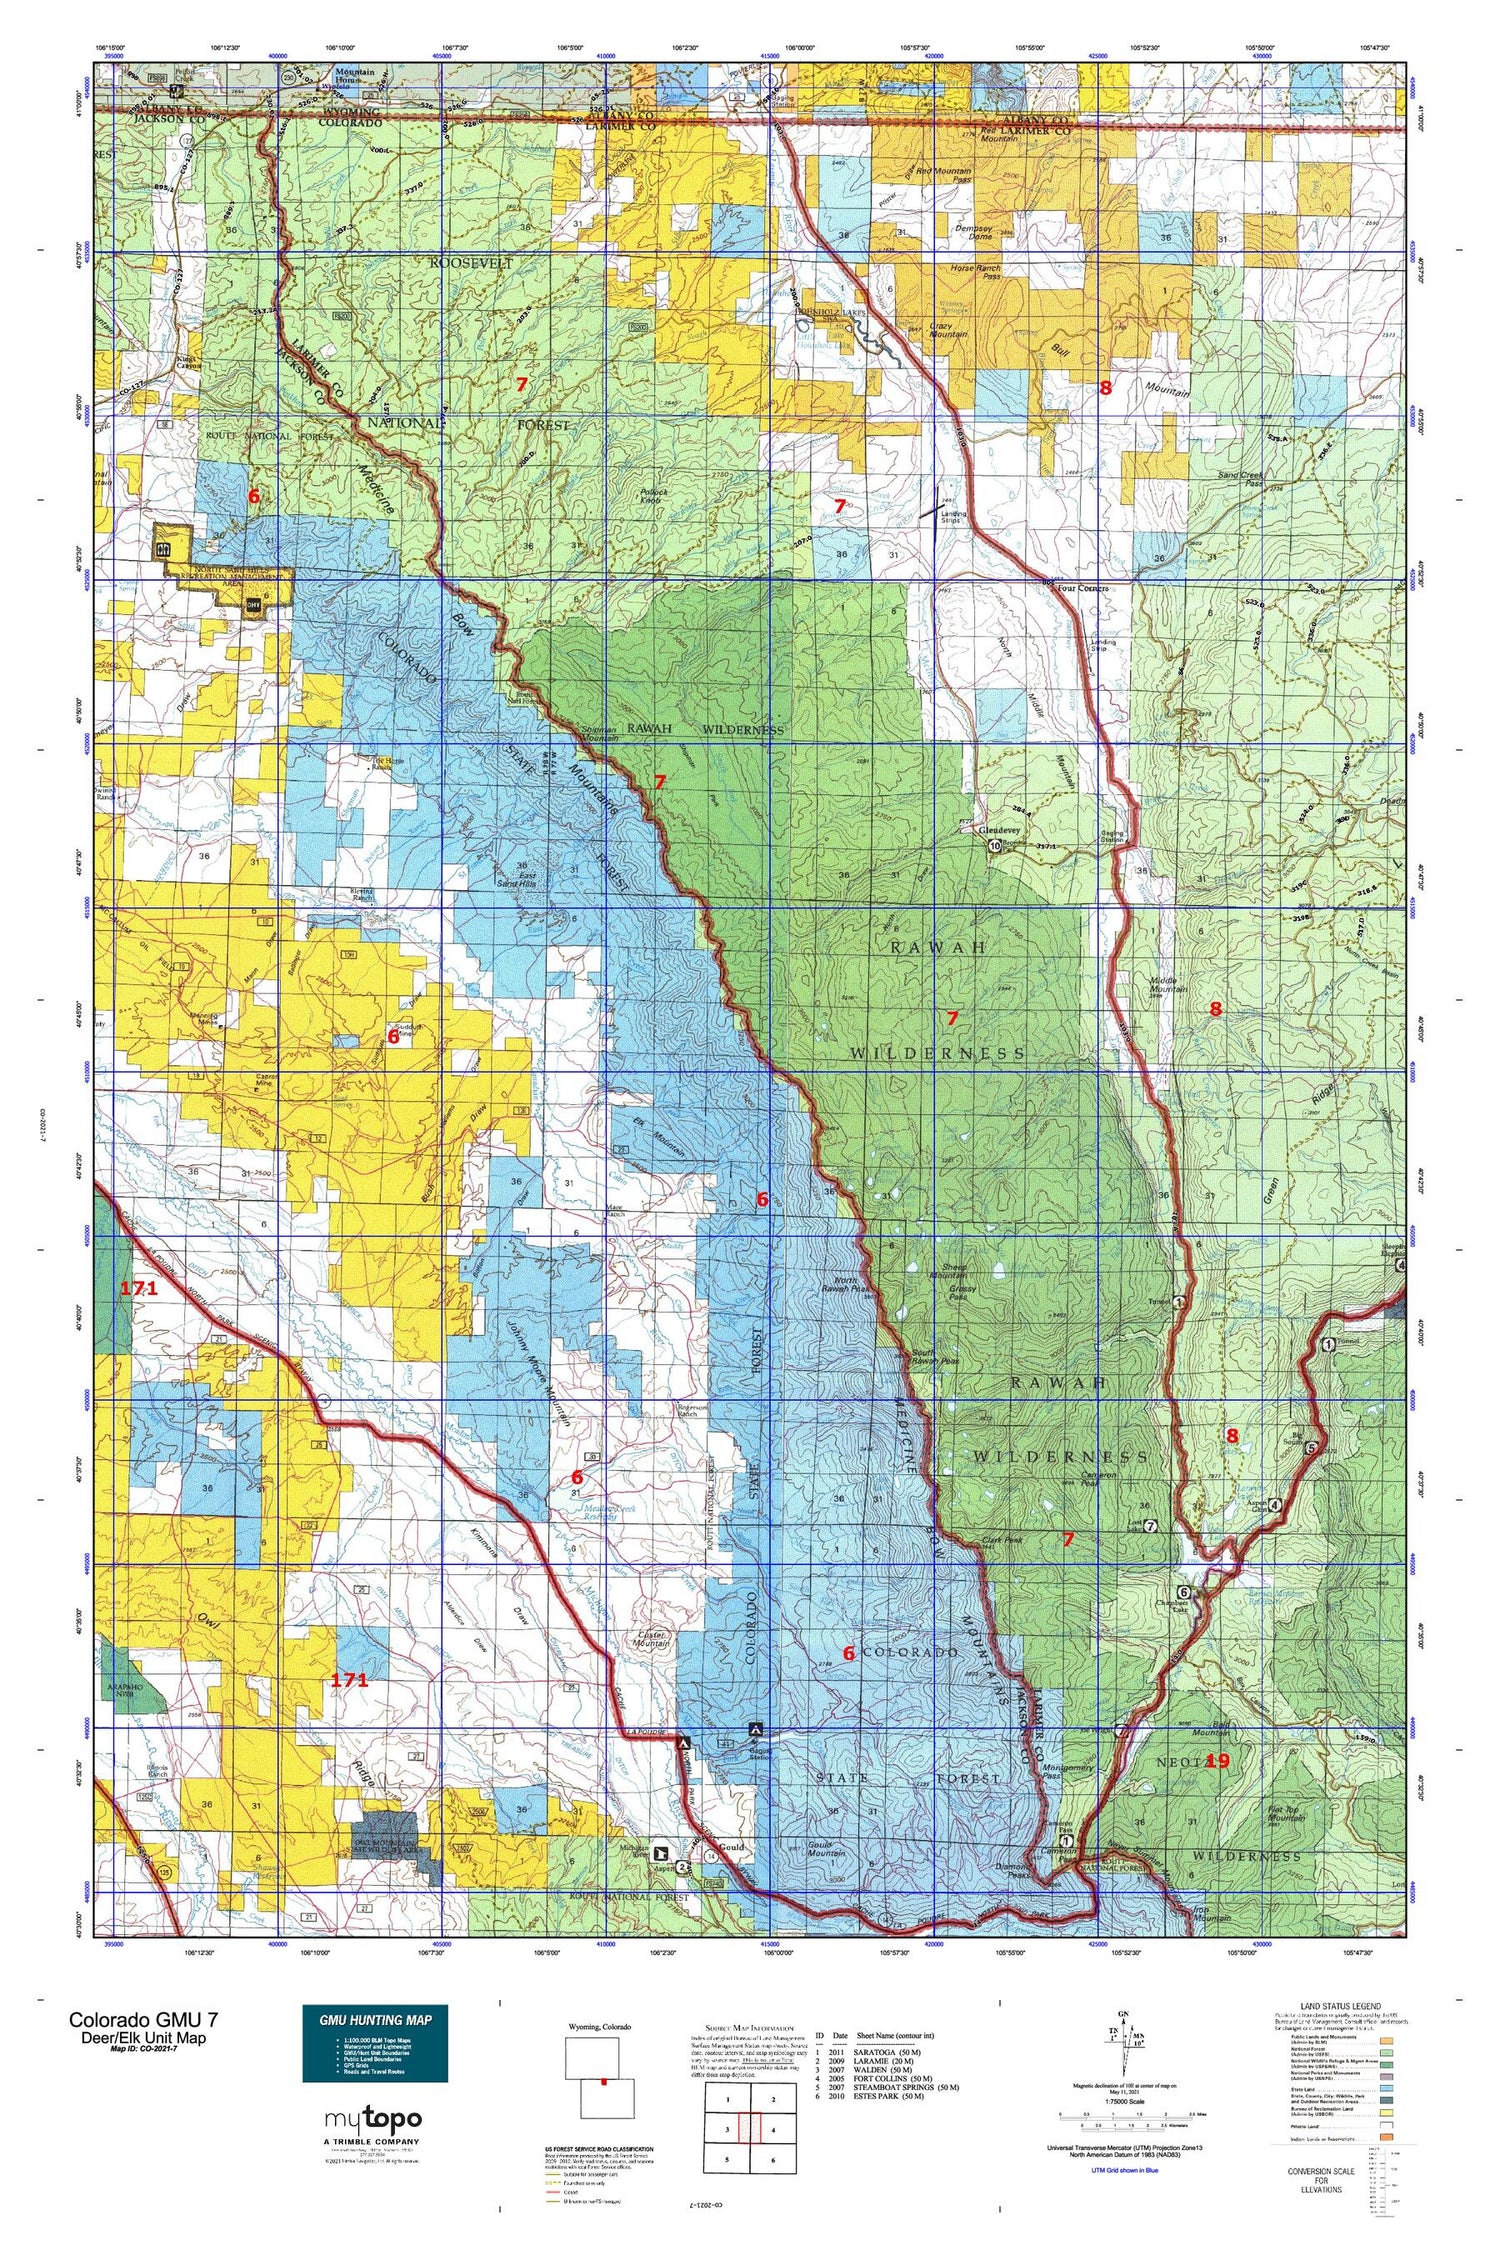 Colorado GMU 7 Map Image